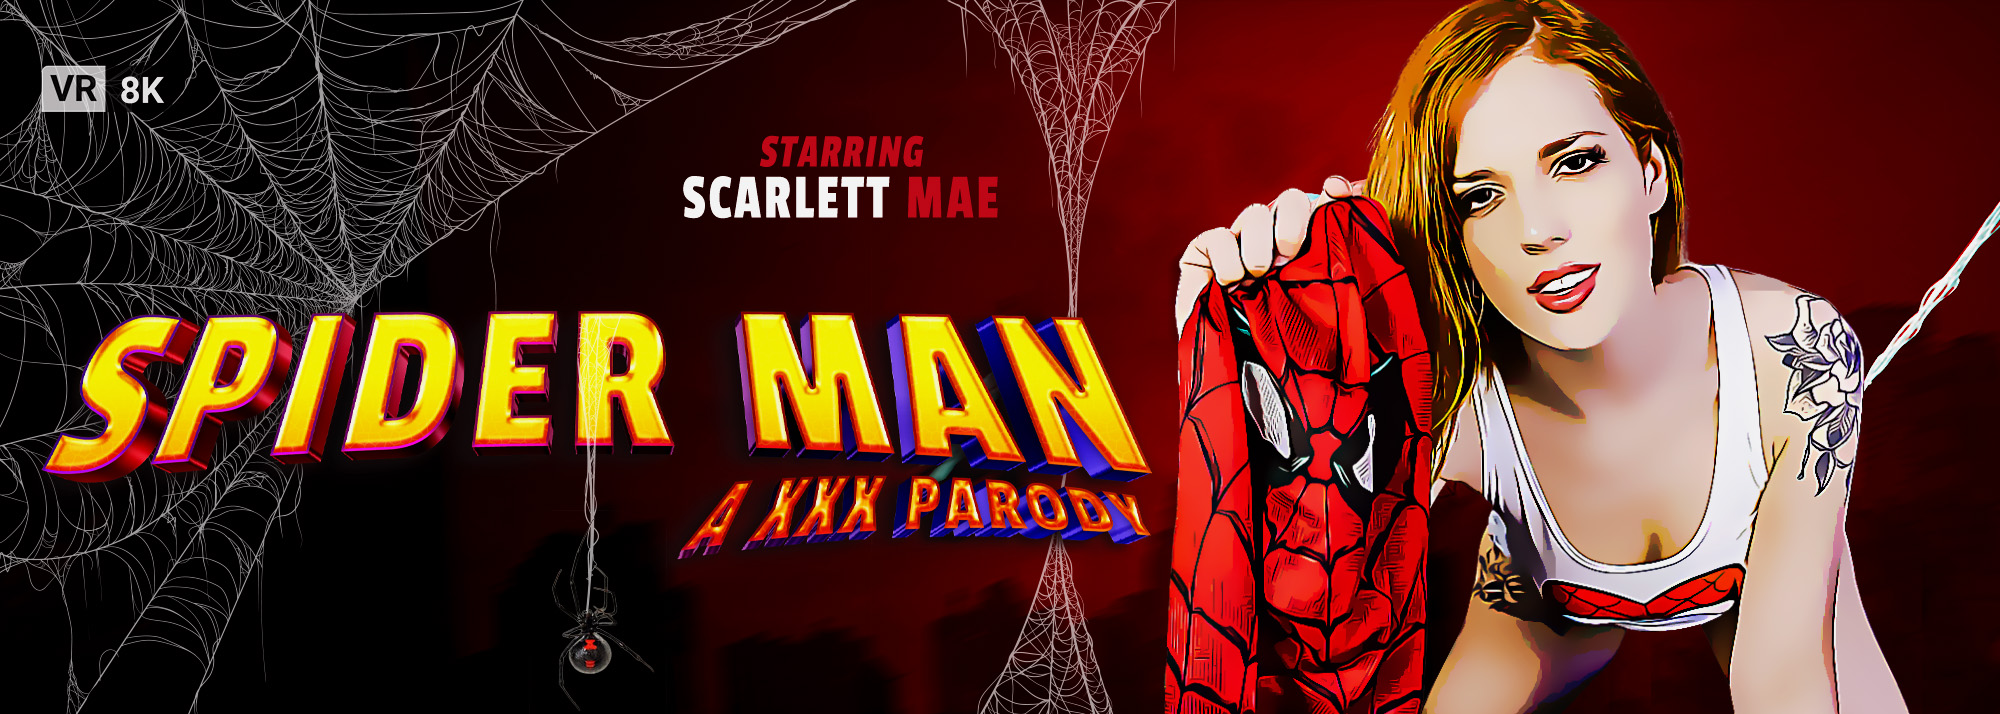 Spider-Man (A XXX Parody) - VR Porn Video, Starring Scarlett Mae VR